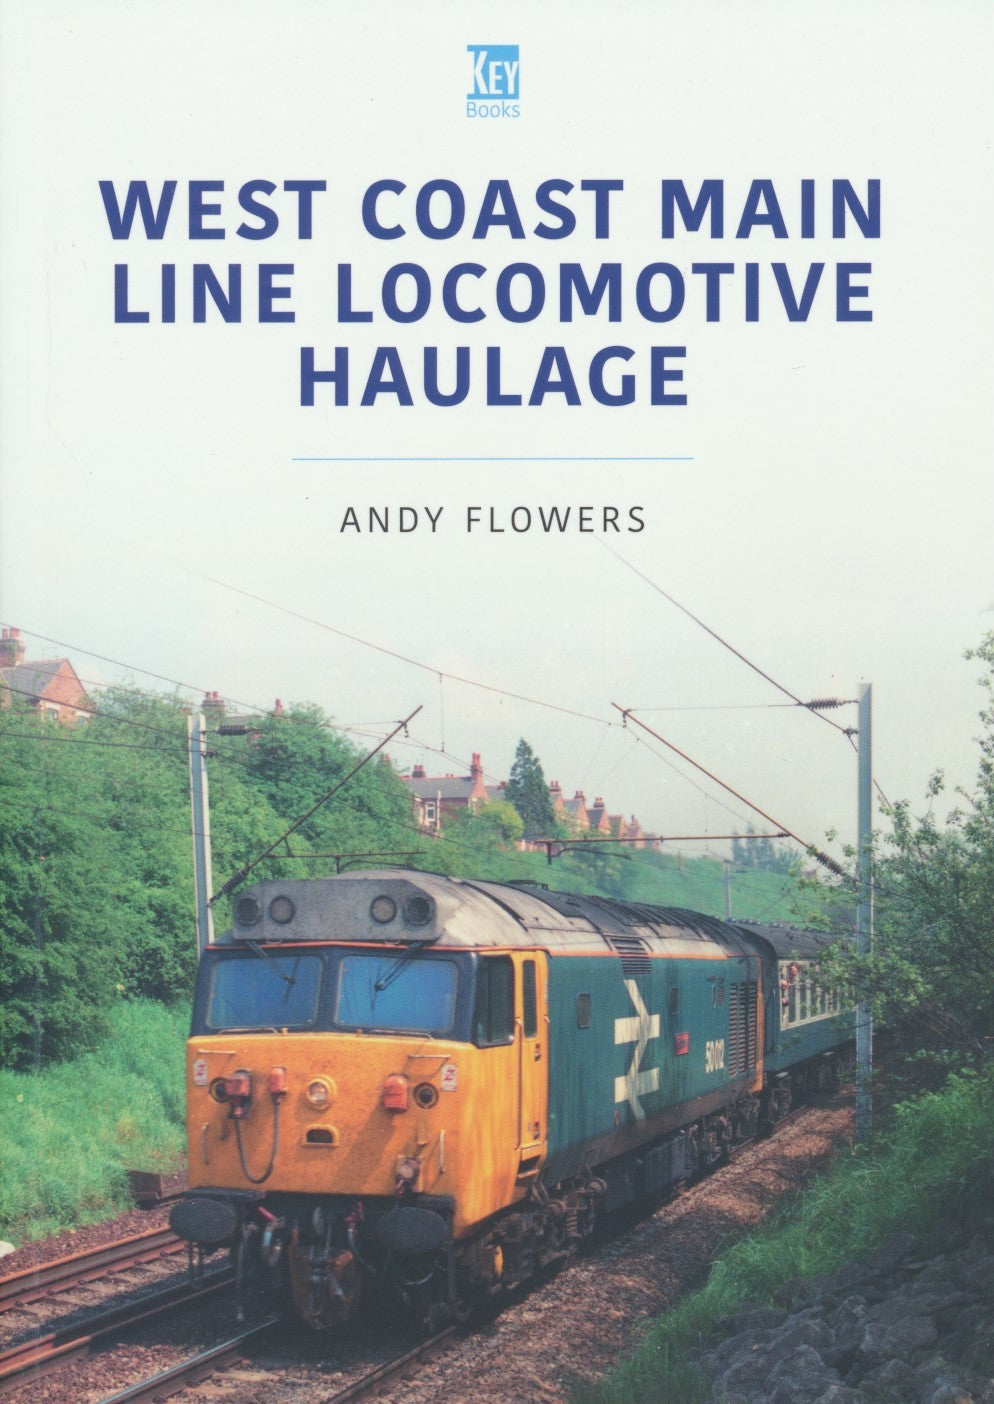 Britain's Railways Series, Volume 24 - West Coast Main Line Locomotive Haulage